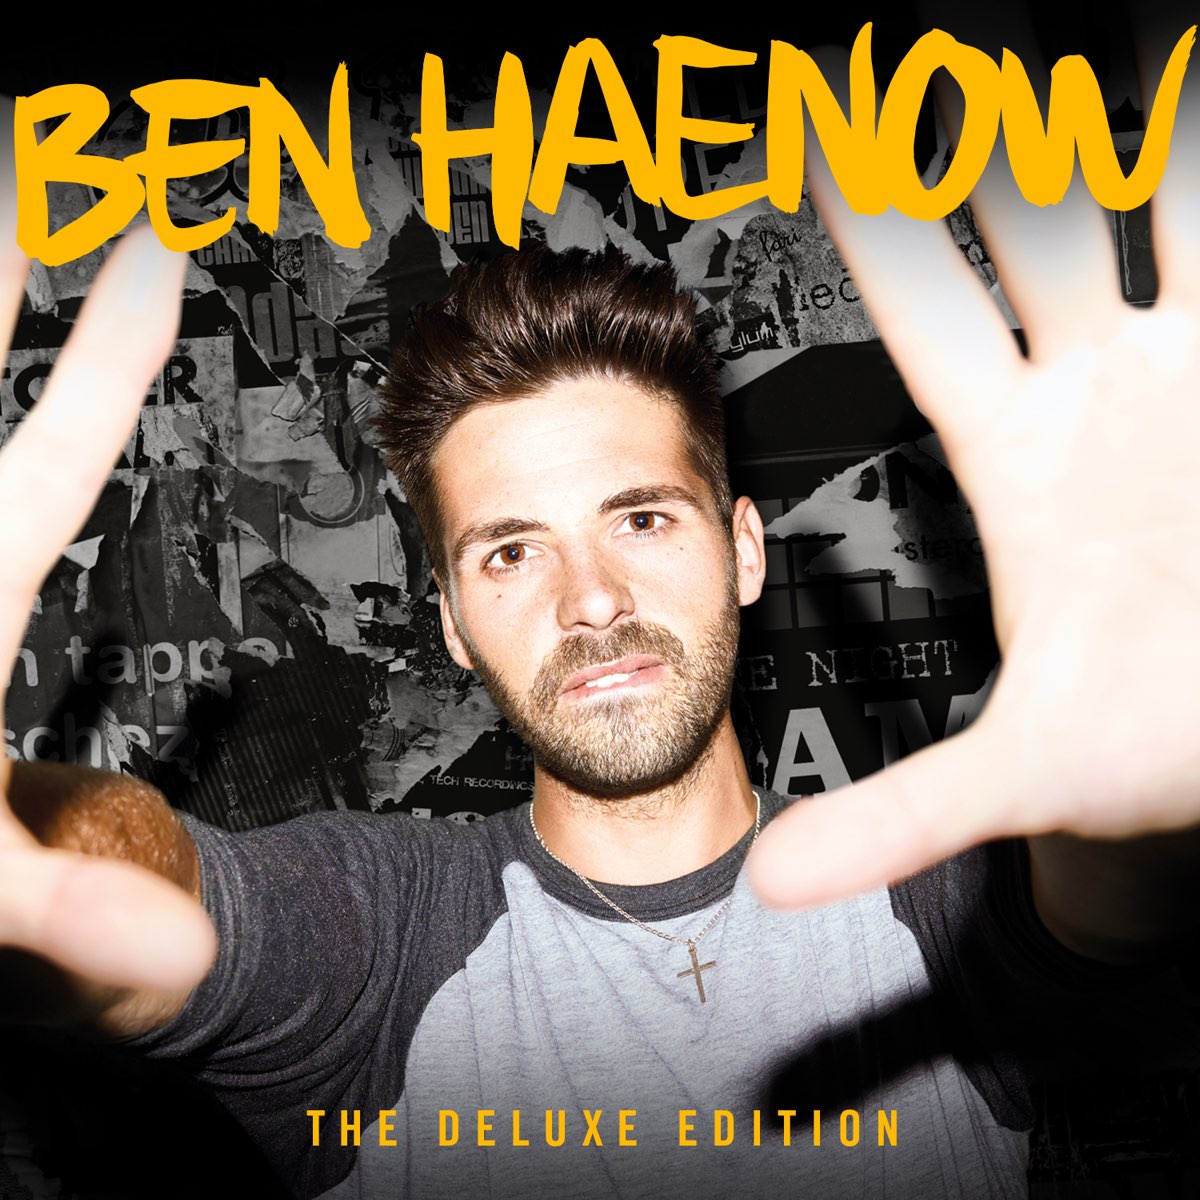 Ben Haenow (Deluxe Album) - Album by Ben Haenow - Apple Music